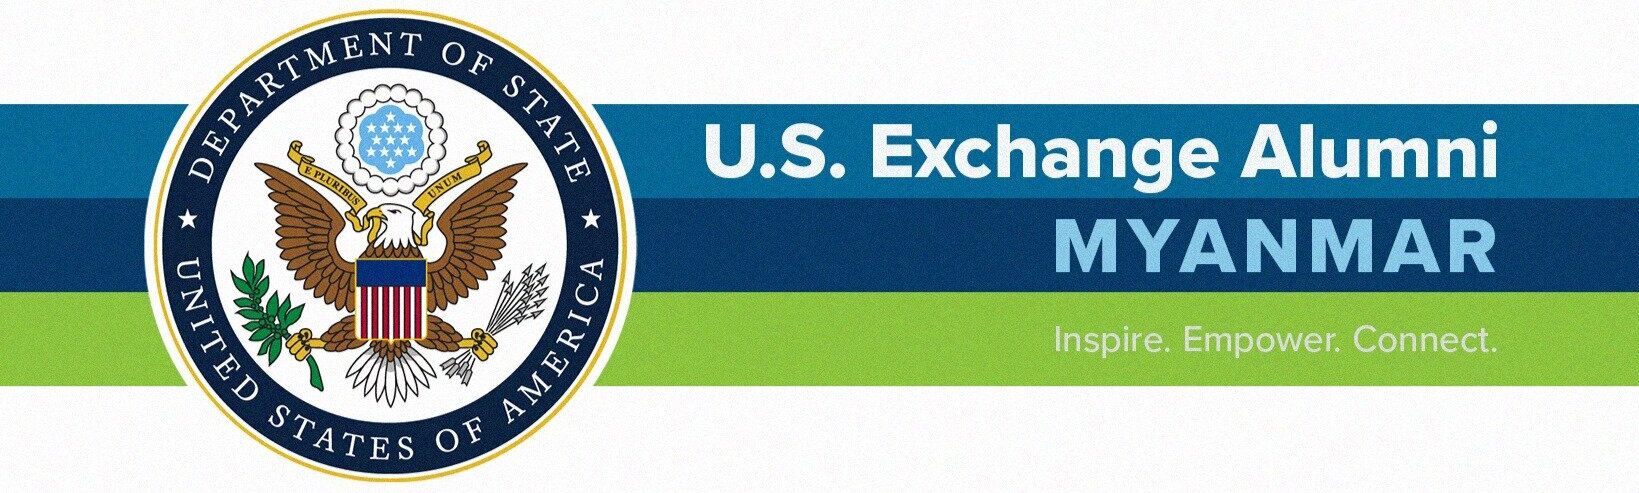 Myanmar+U.S.+Exchange+Alumni.jpg